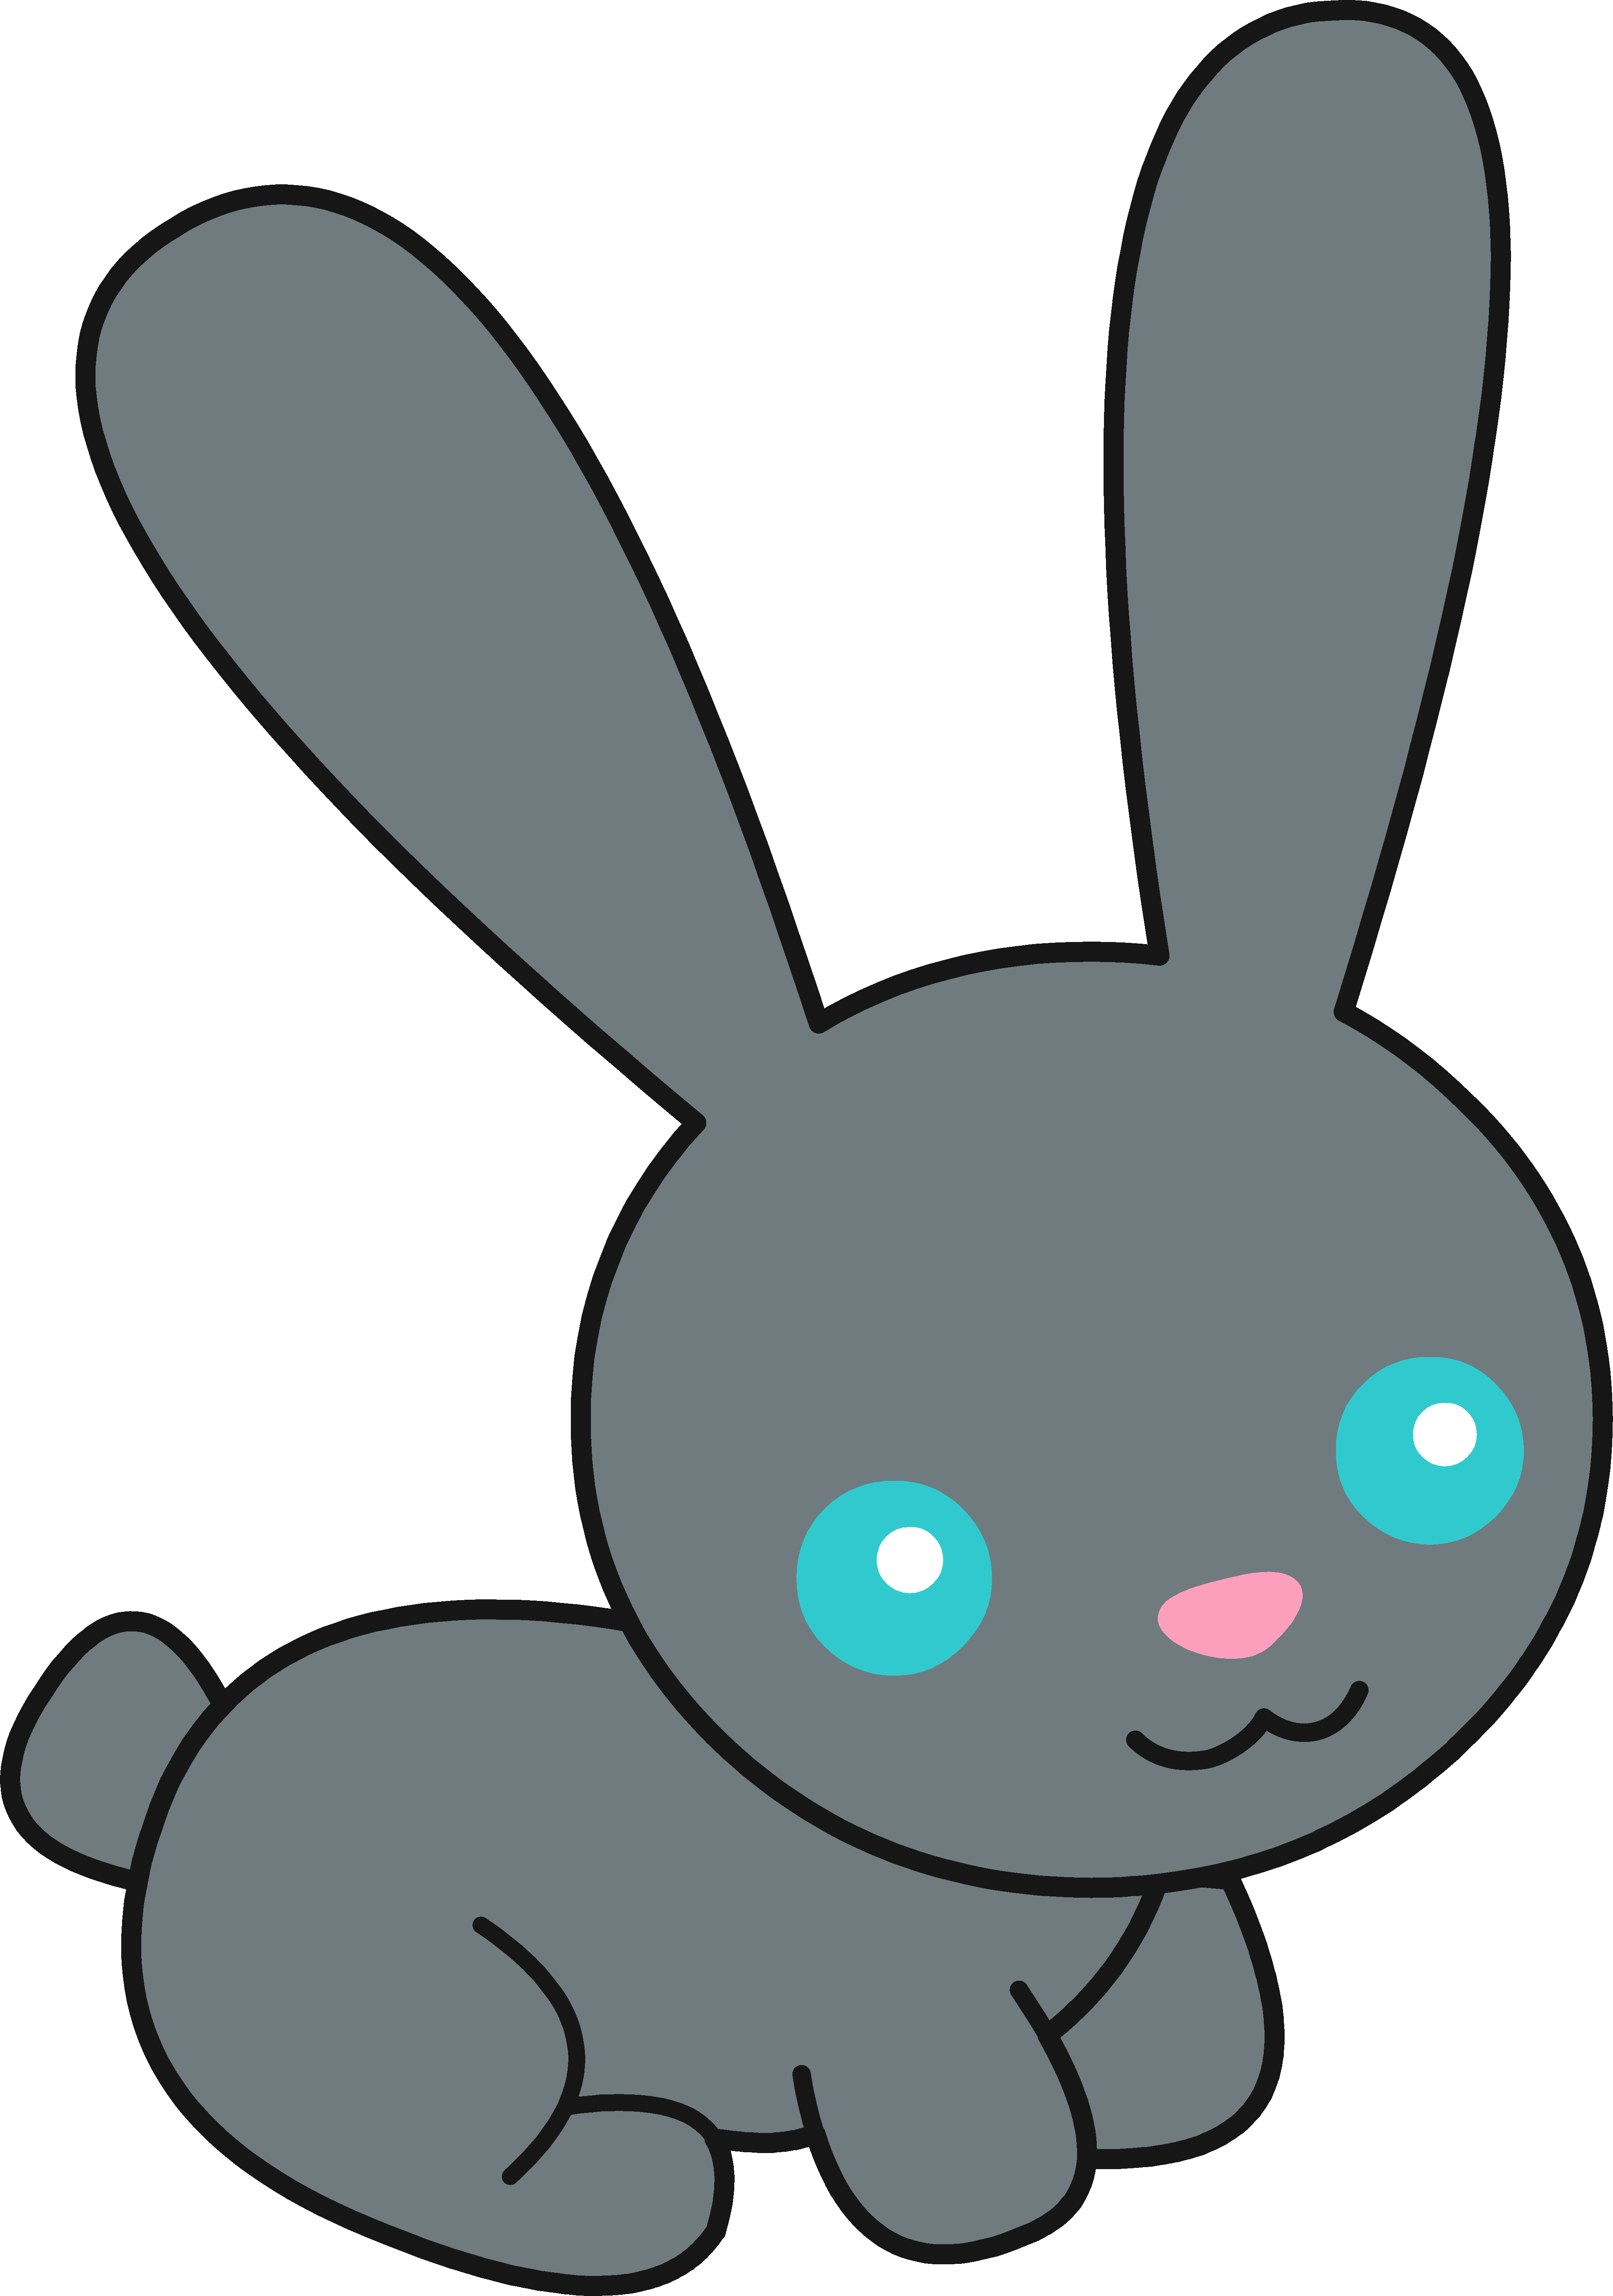 Cute bunny looking up clipart - ClipartFox